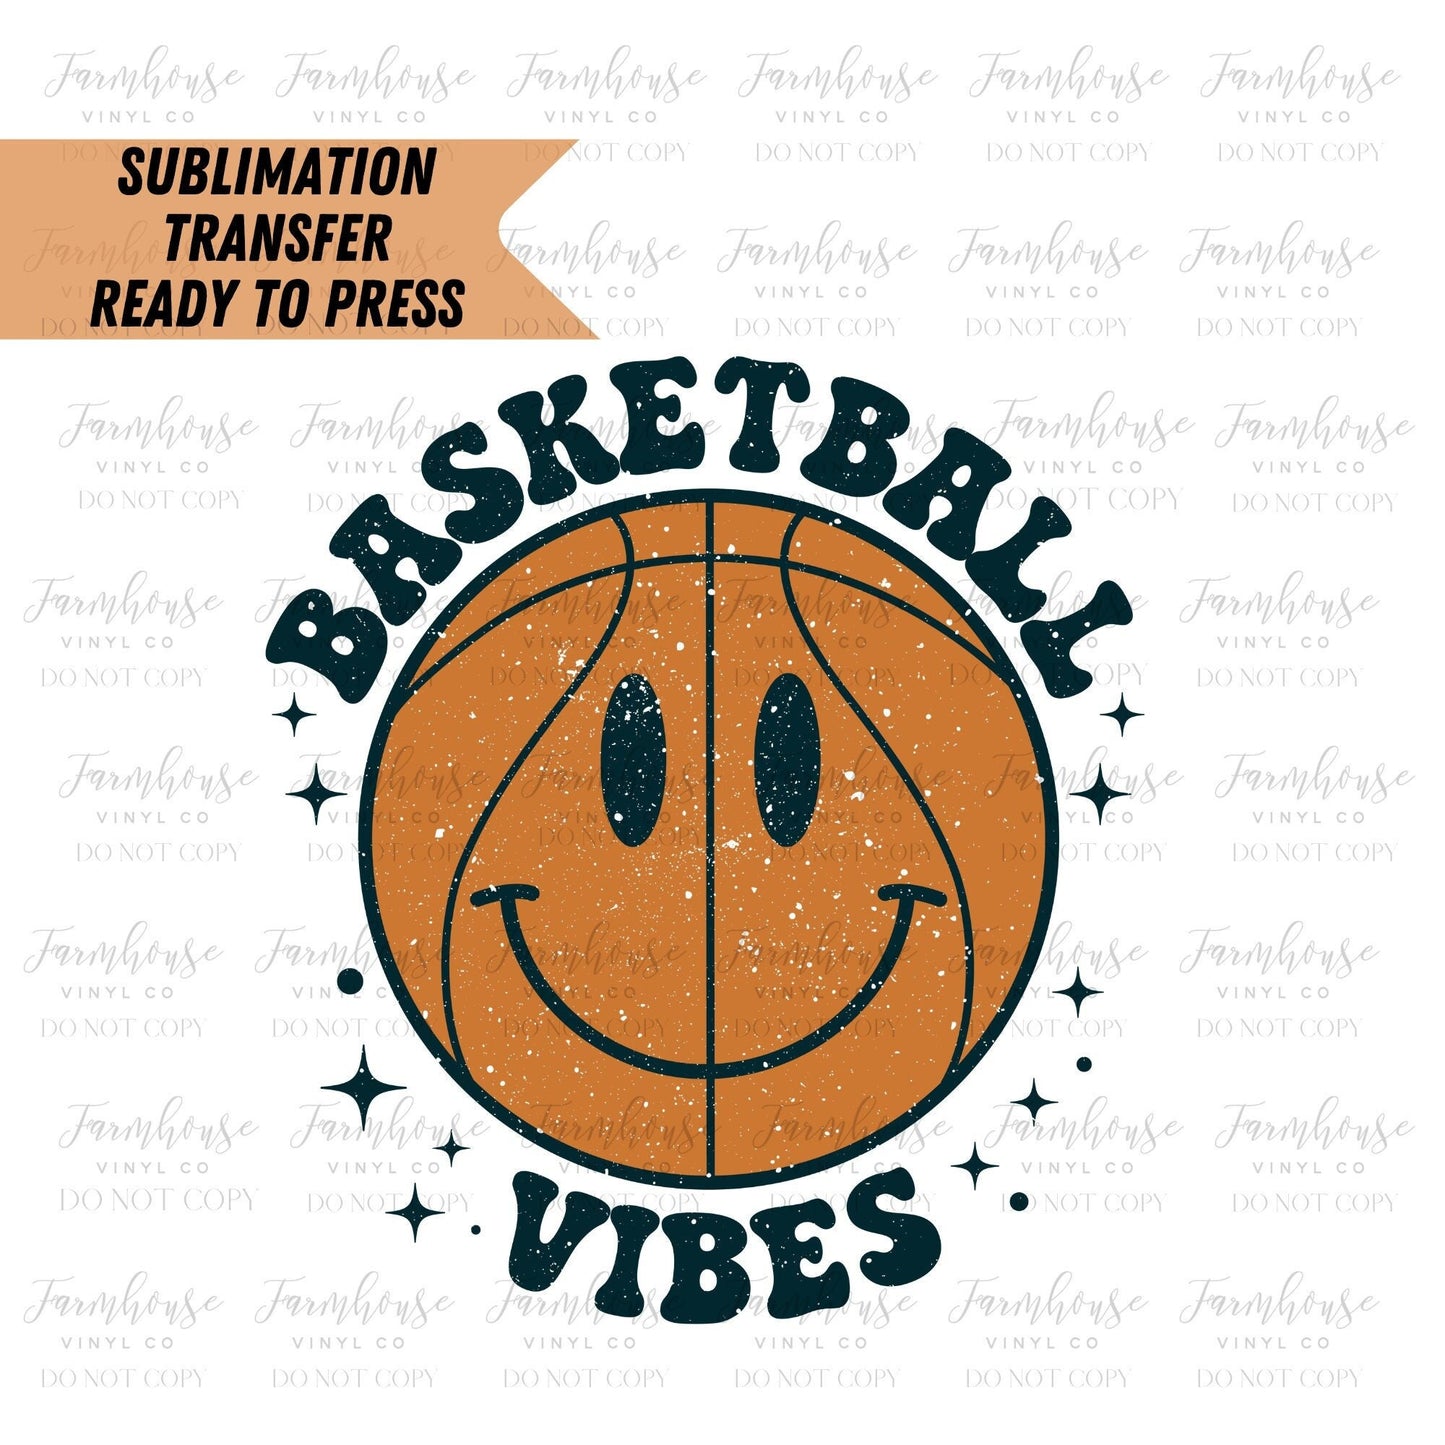 Distressed Basketball Vibes Retro Smiley Face Ready to Press Sublimation Transfer - Farmhouse Vinyl Co